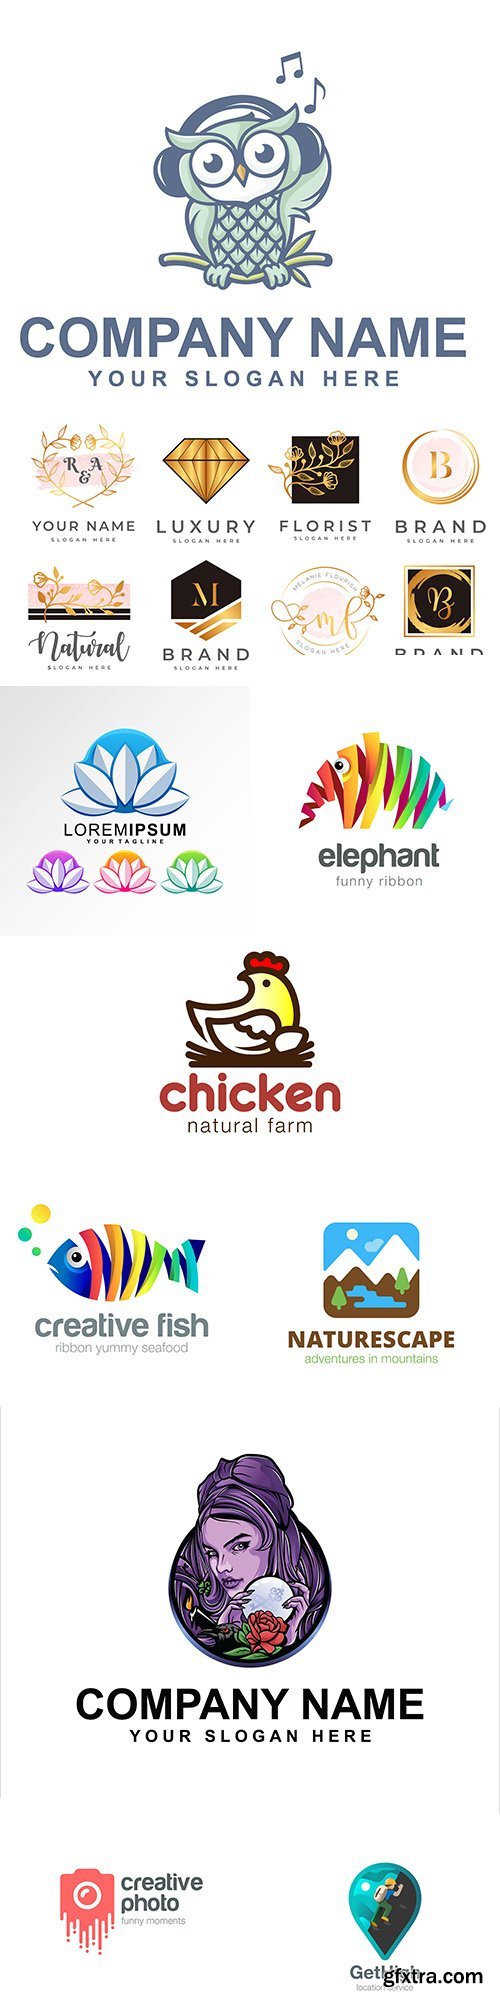 Creative business logos corporate company design 48